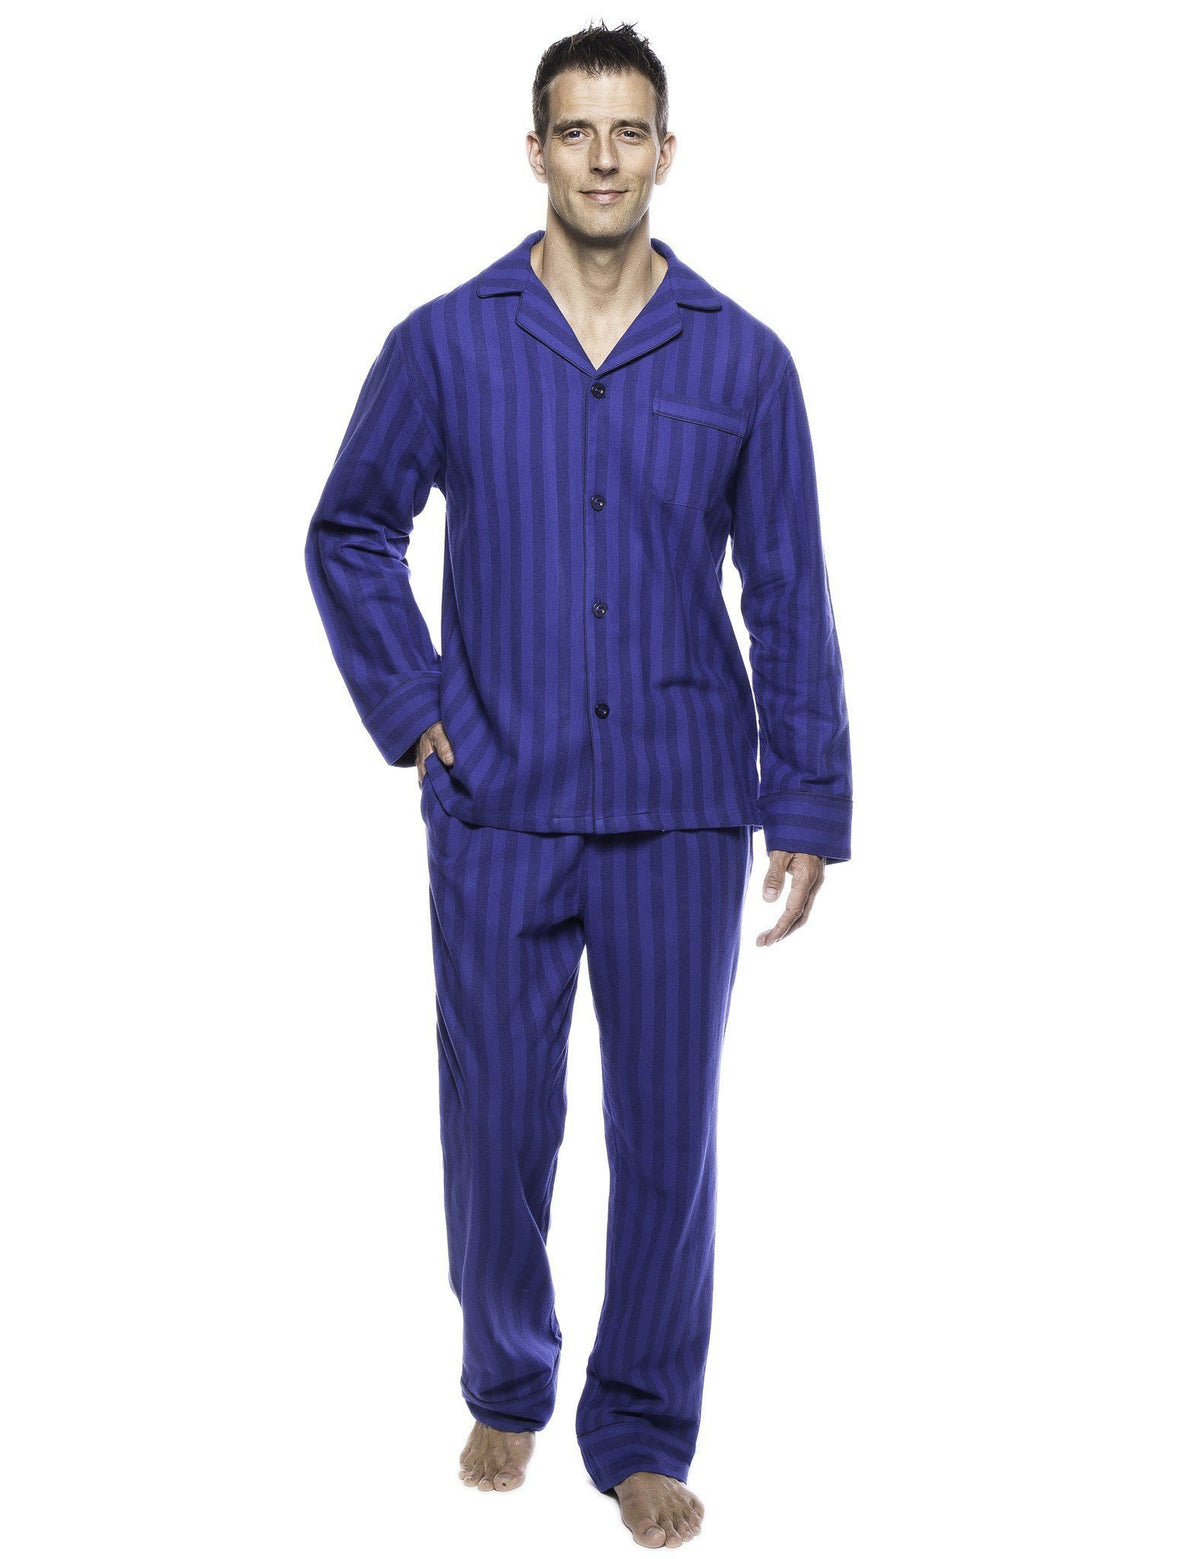 Box Packaged Men's Premium 100% Cotton Flannel Pajama Sleepwear Set - Stripes Tonal Blue